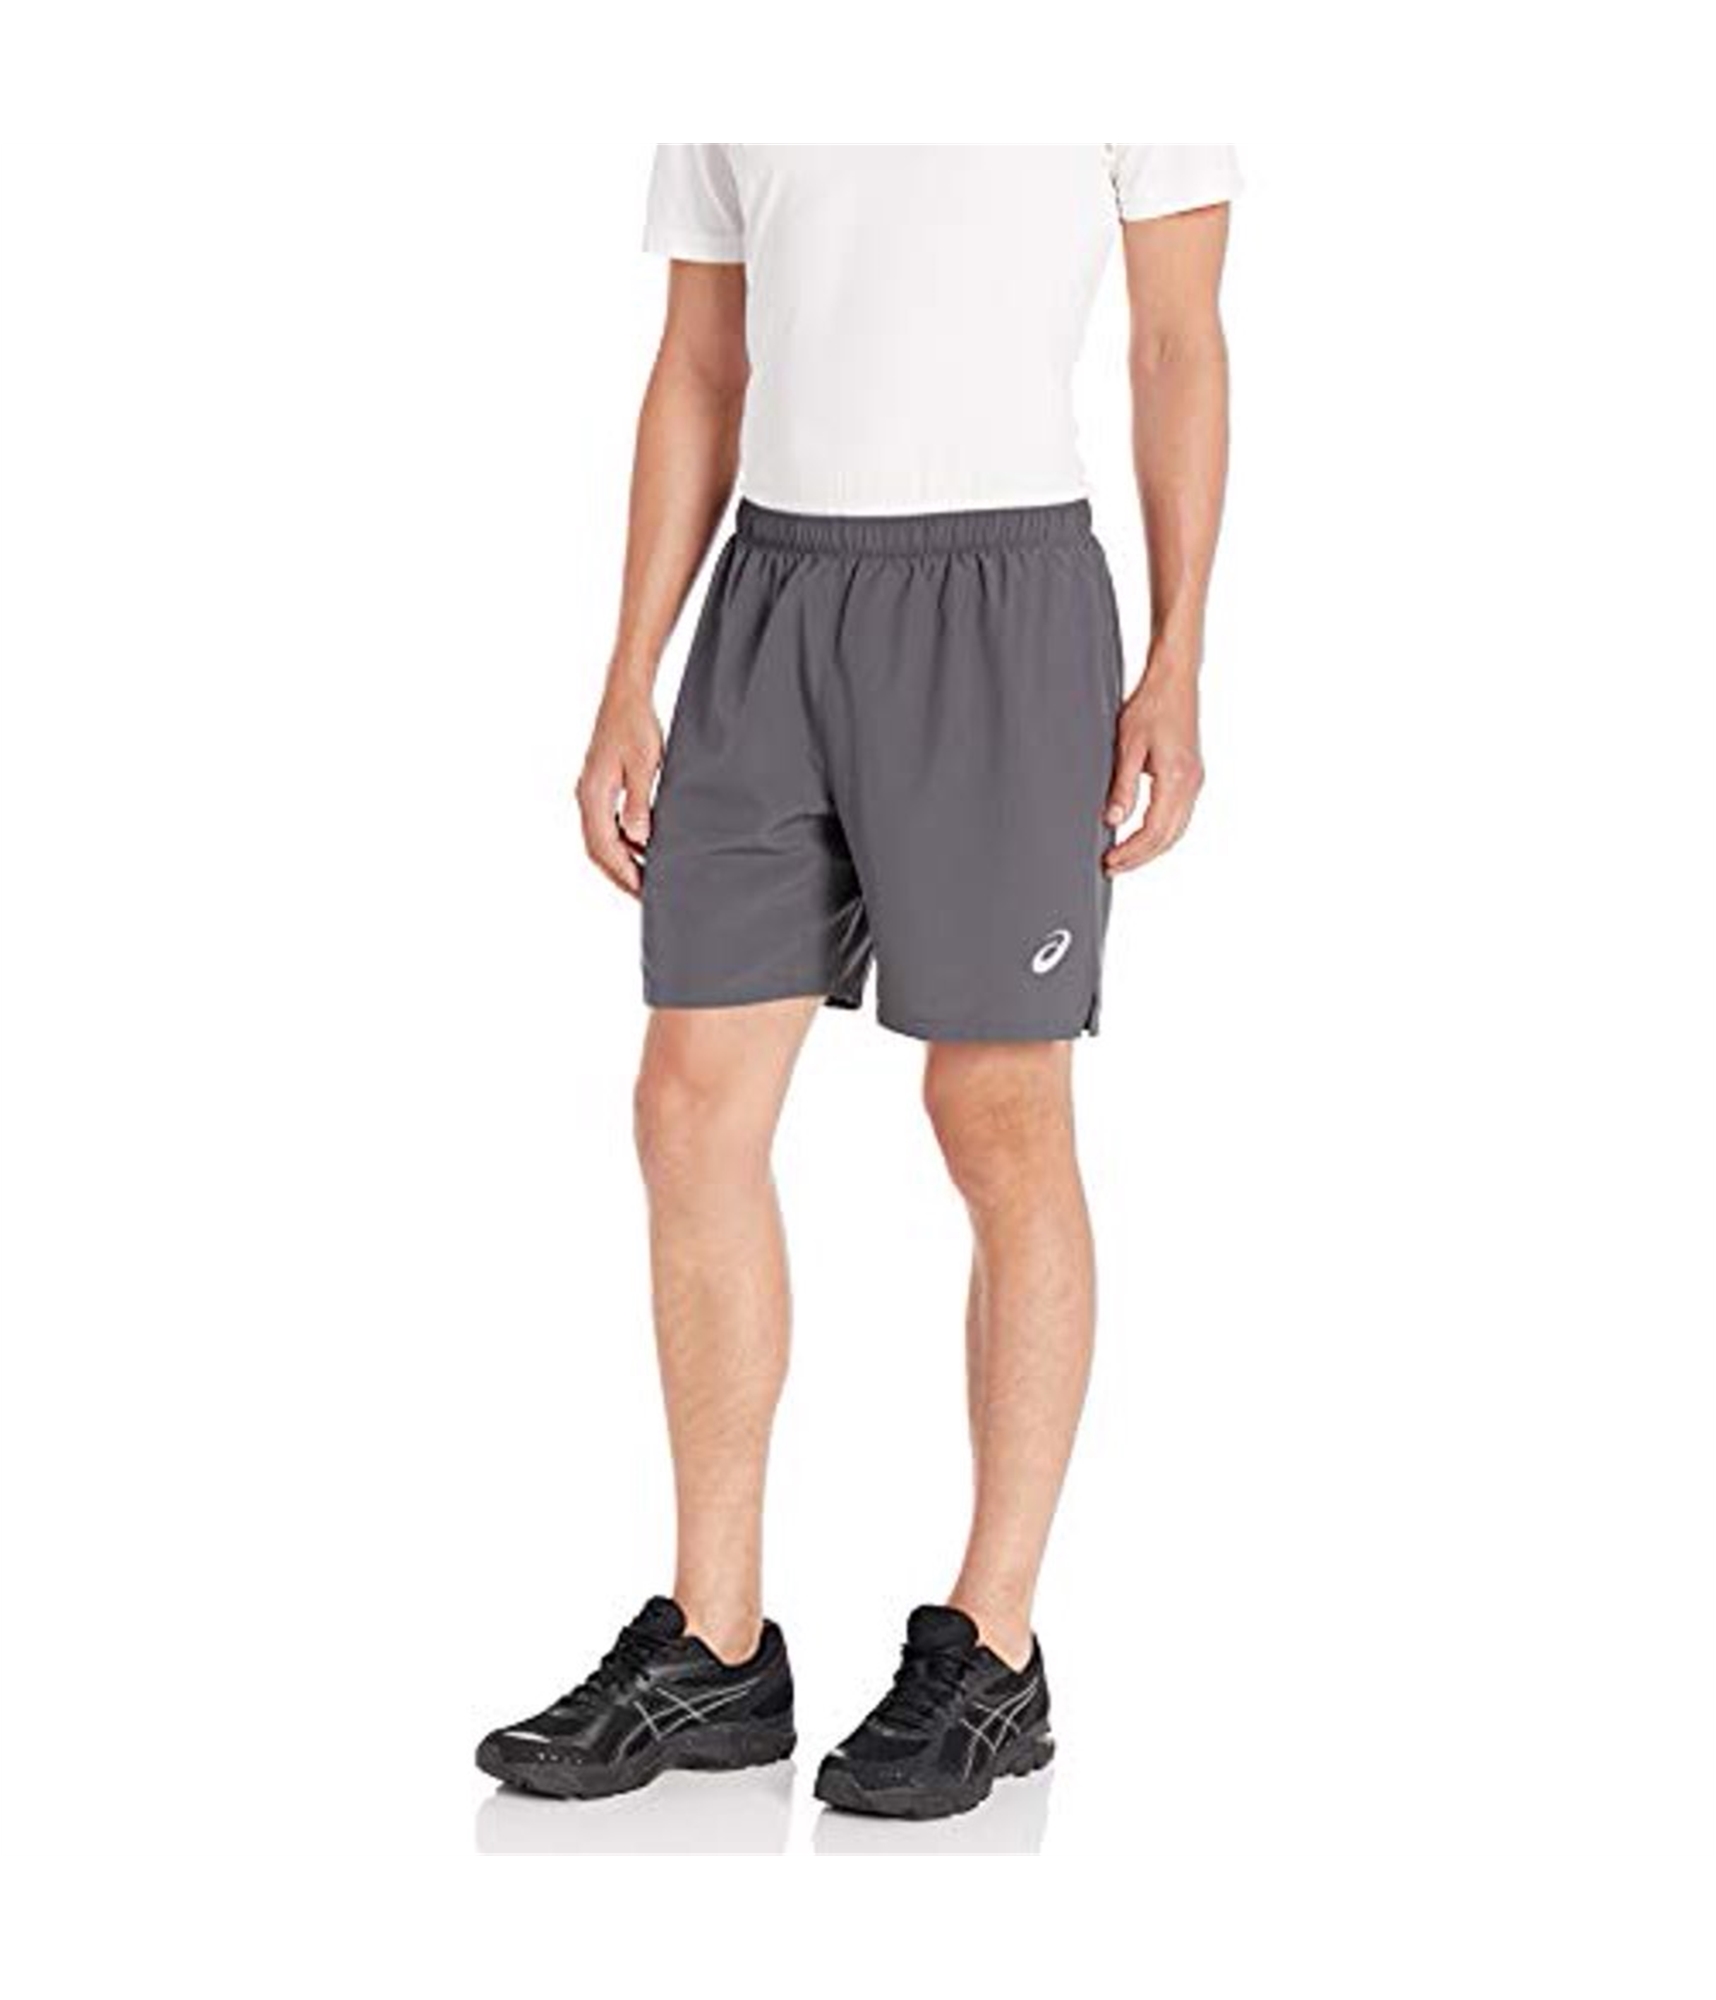 Asics Mens Silver Logo Athletic Workout Shorts | eBay